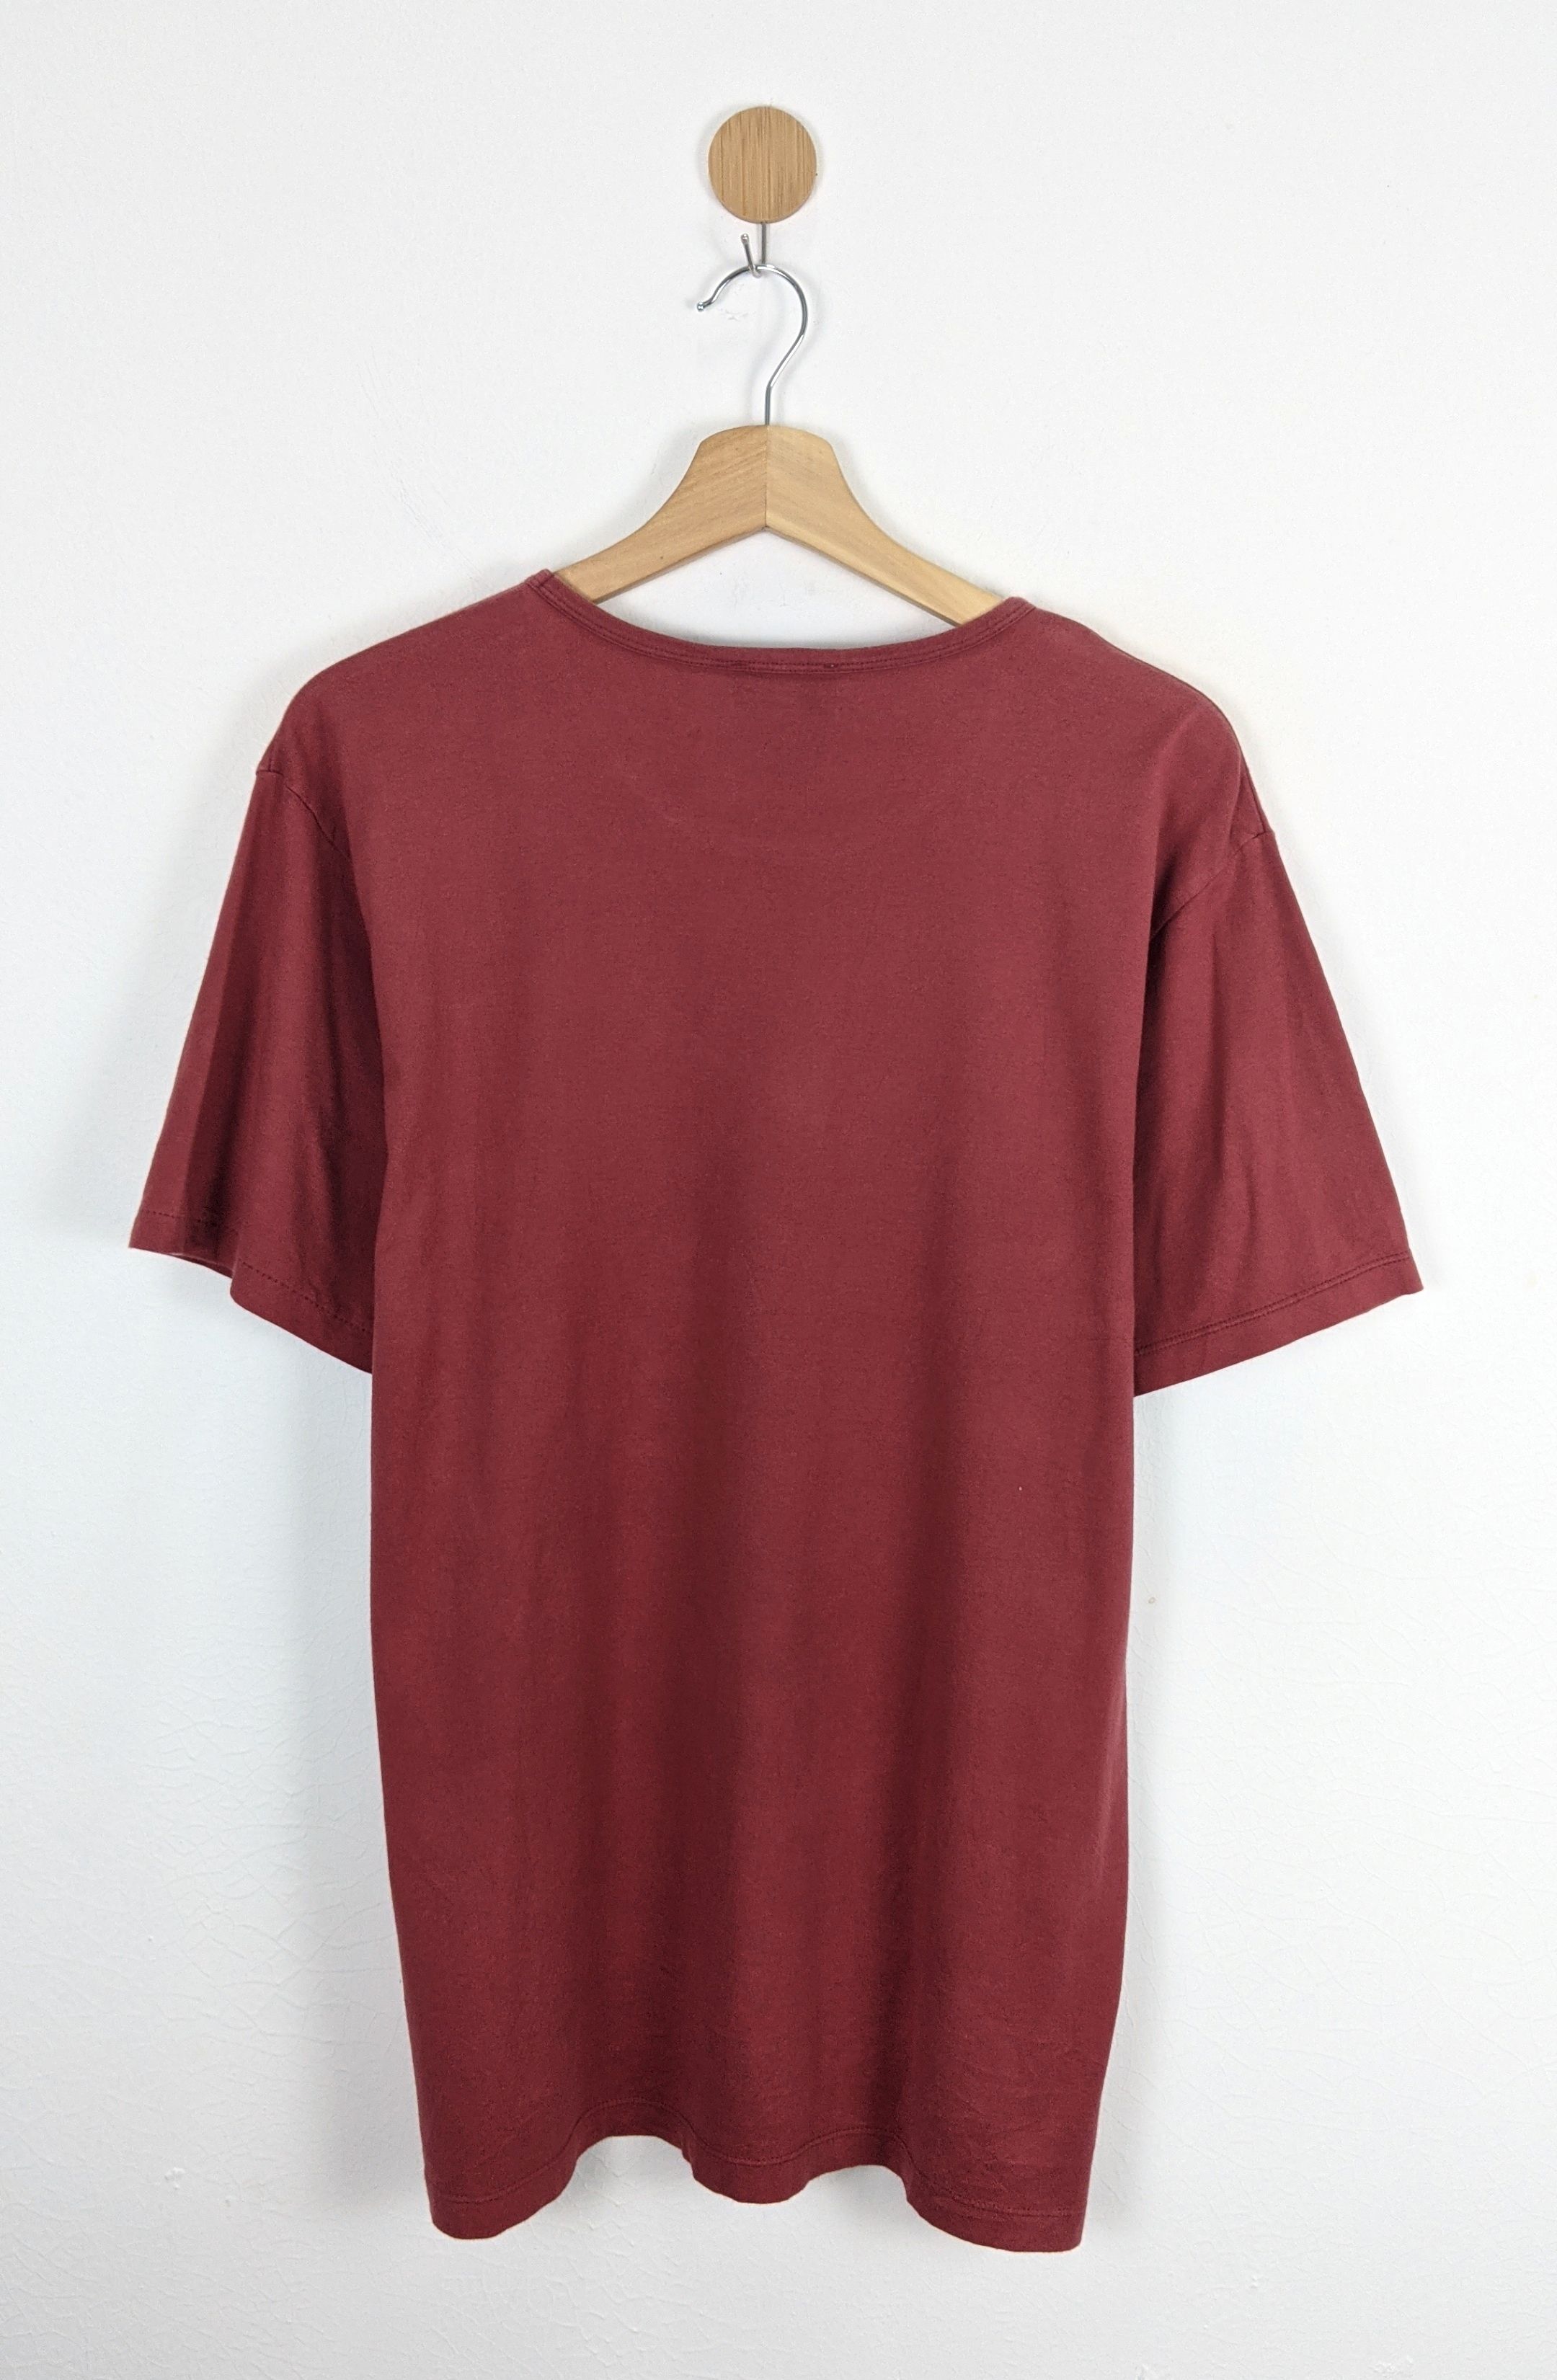 Vivienne Westwood Man shirt - 3